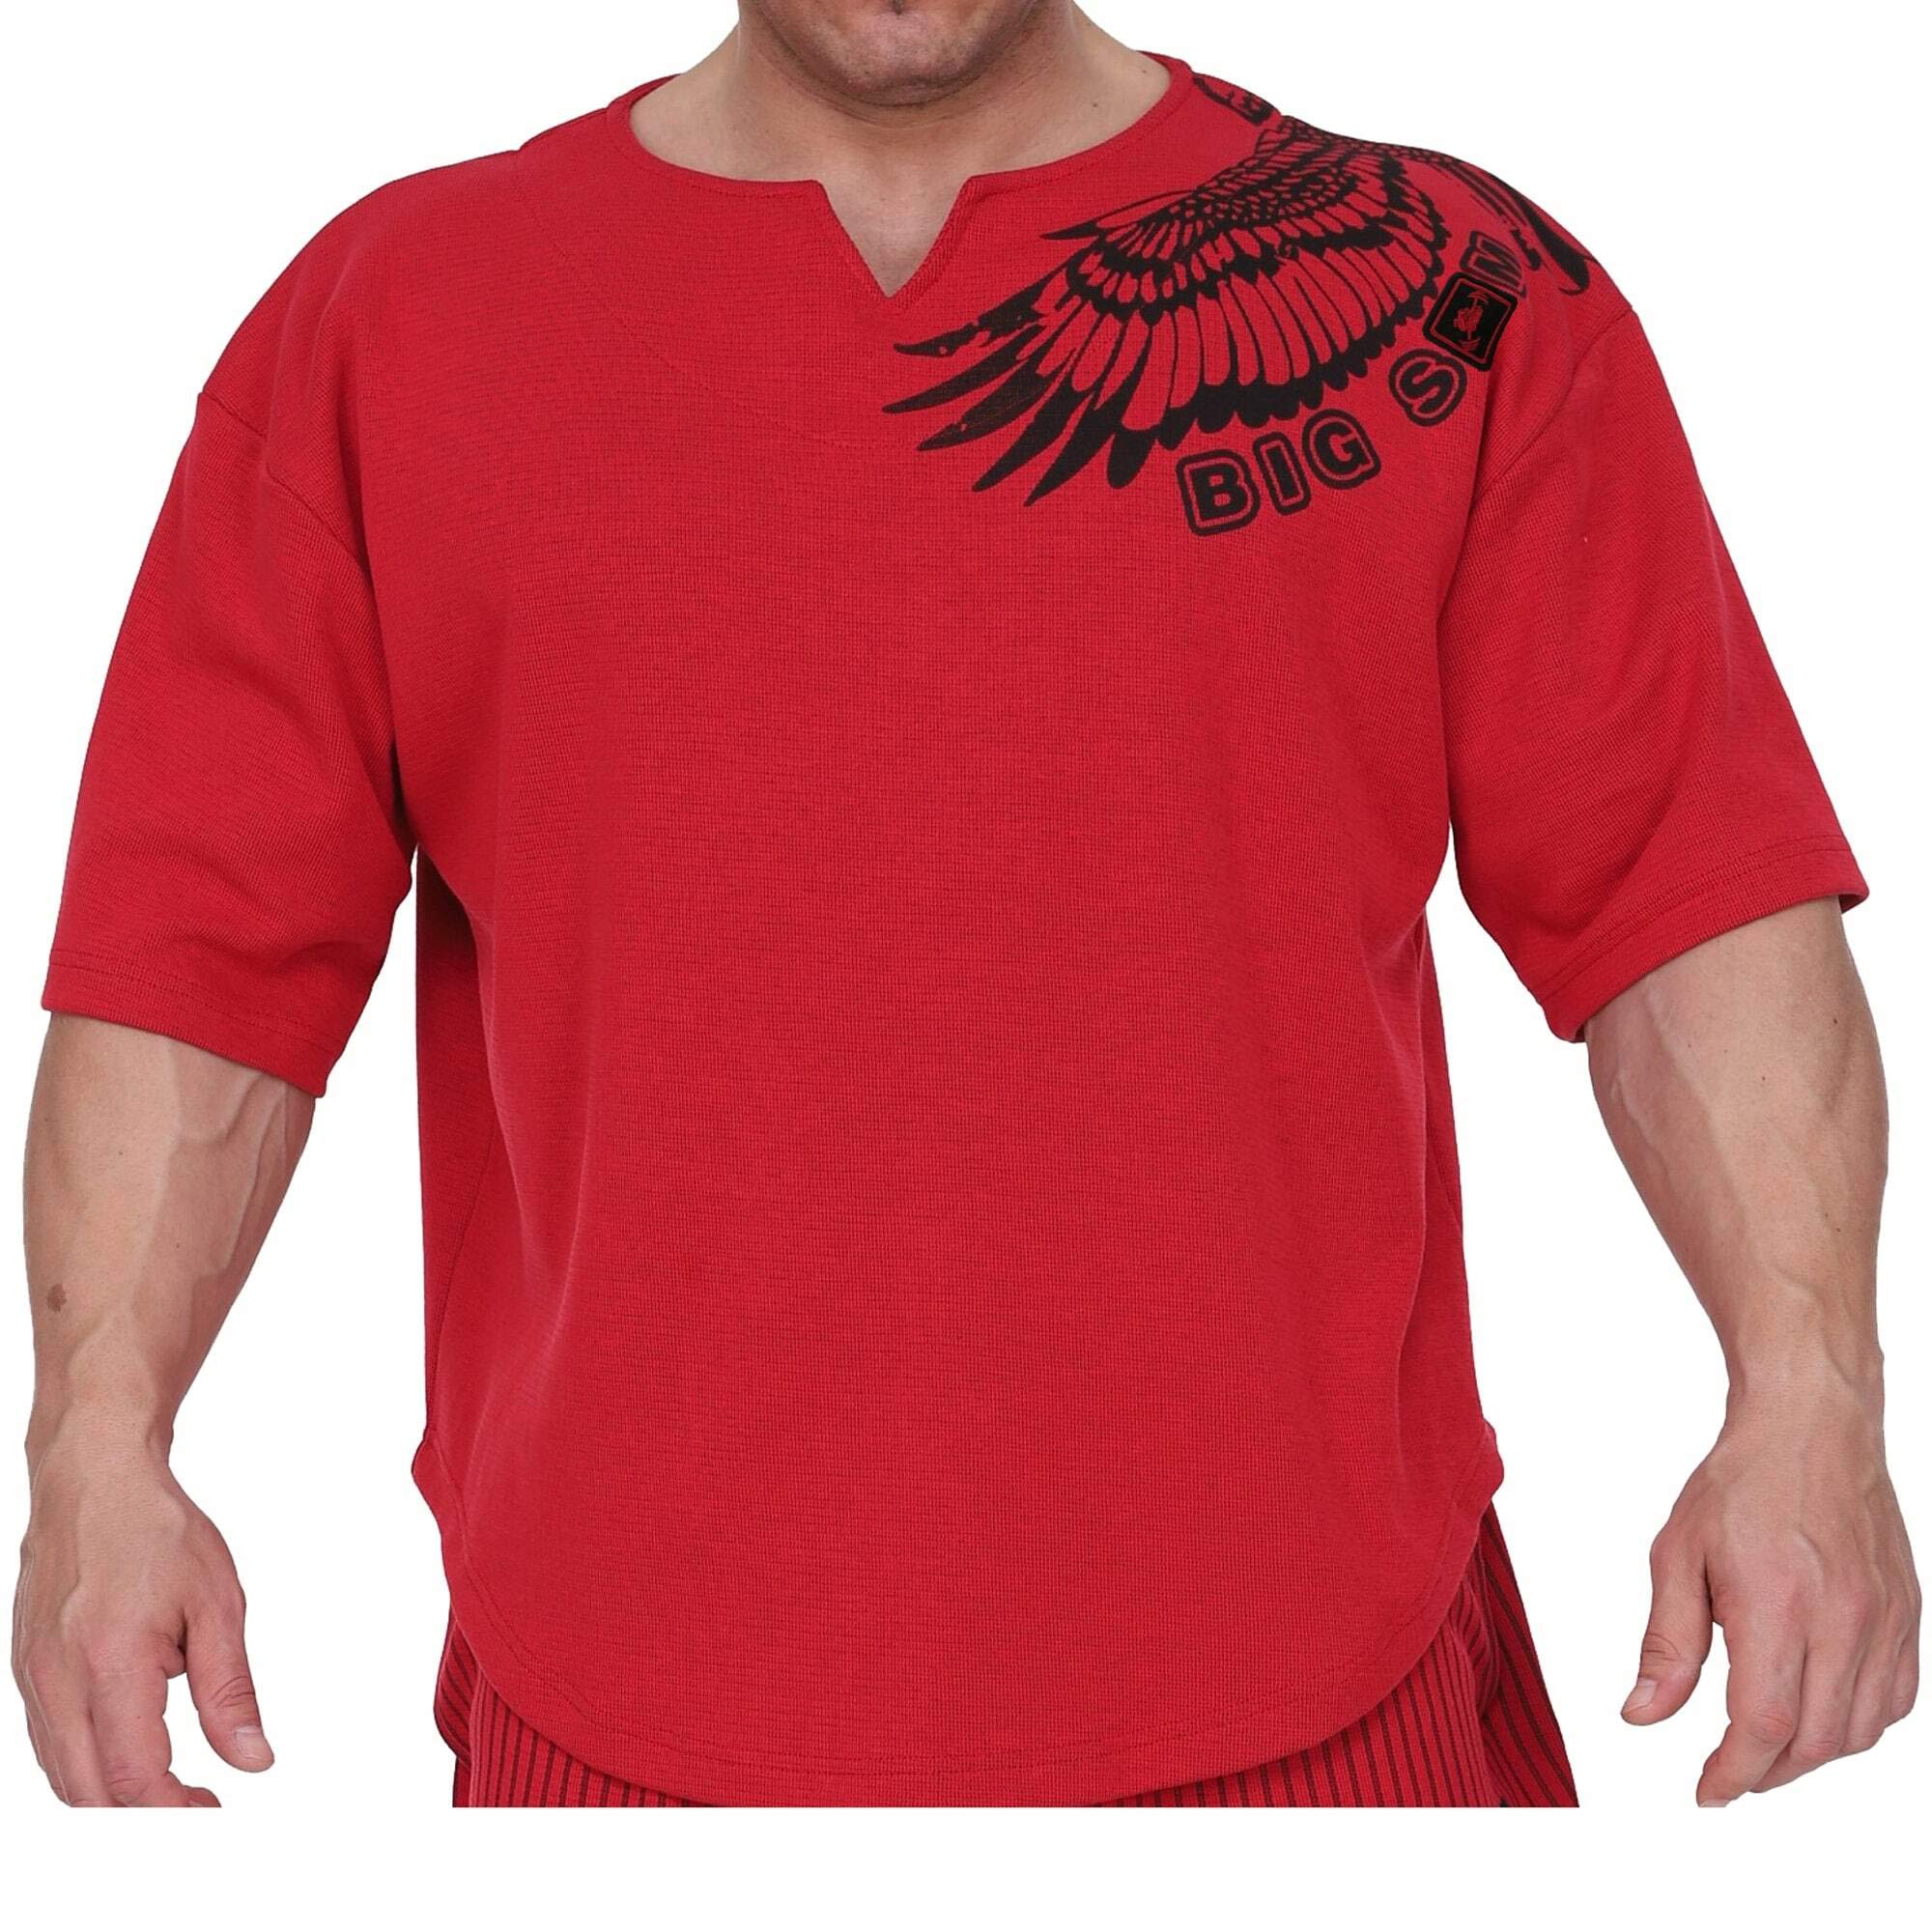 BIG SM EXTREME SPORTSWEAR Ragtop Rag Top Sweater T-Shirt Bodybuilding 3244